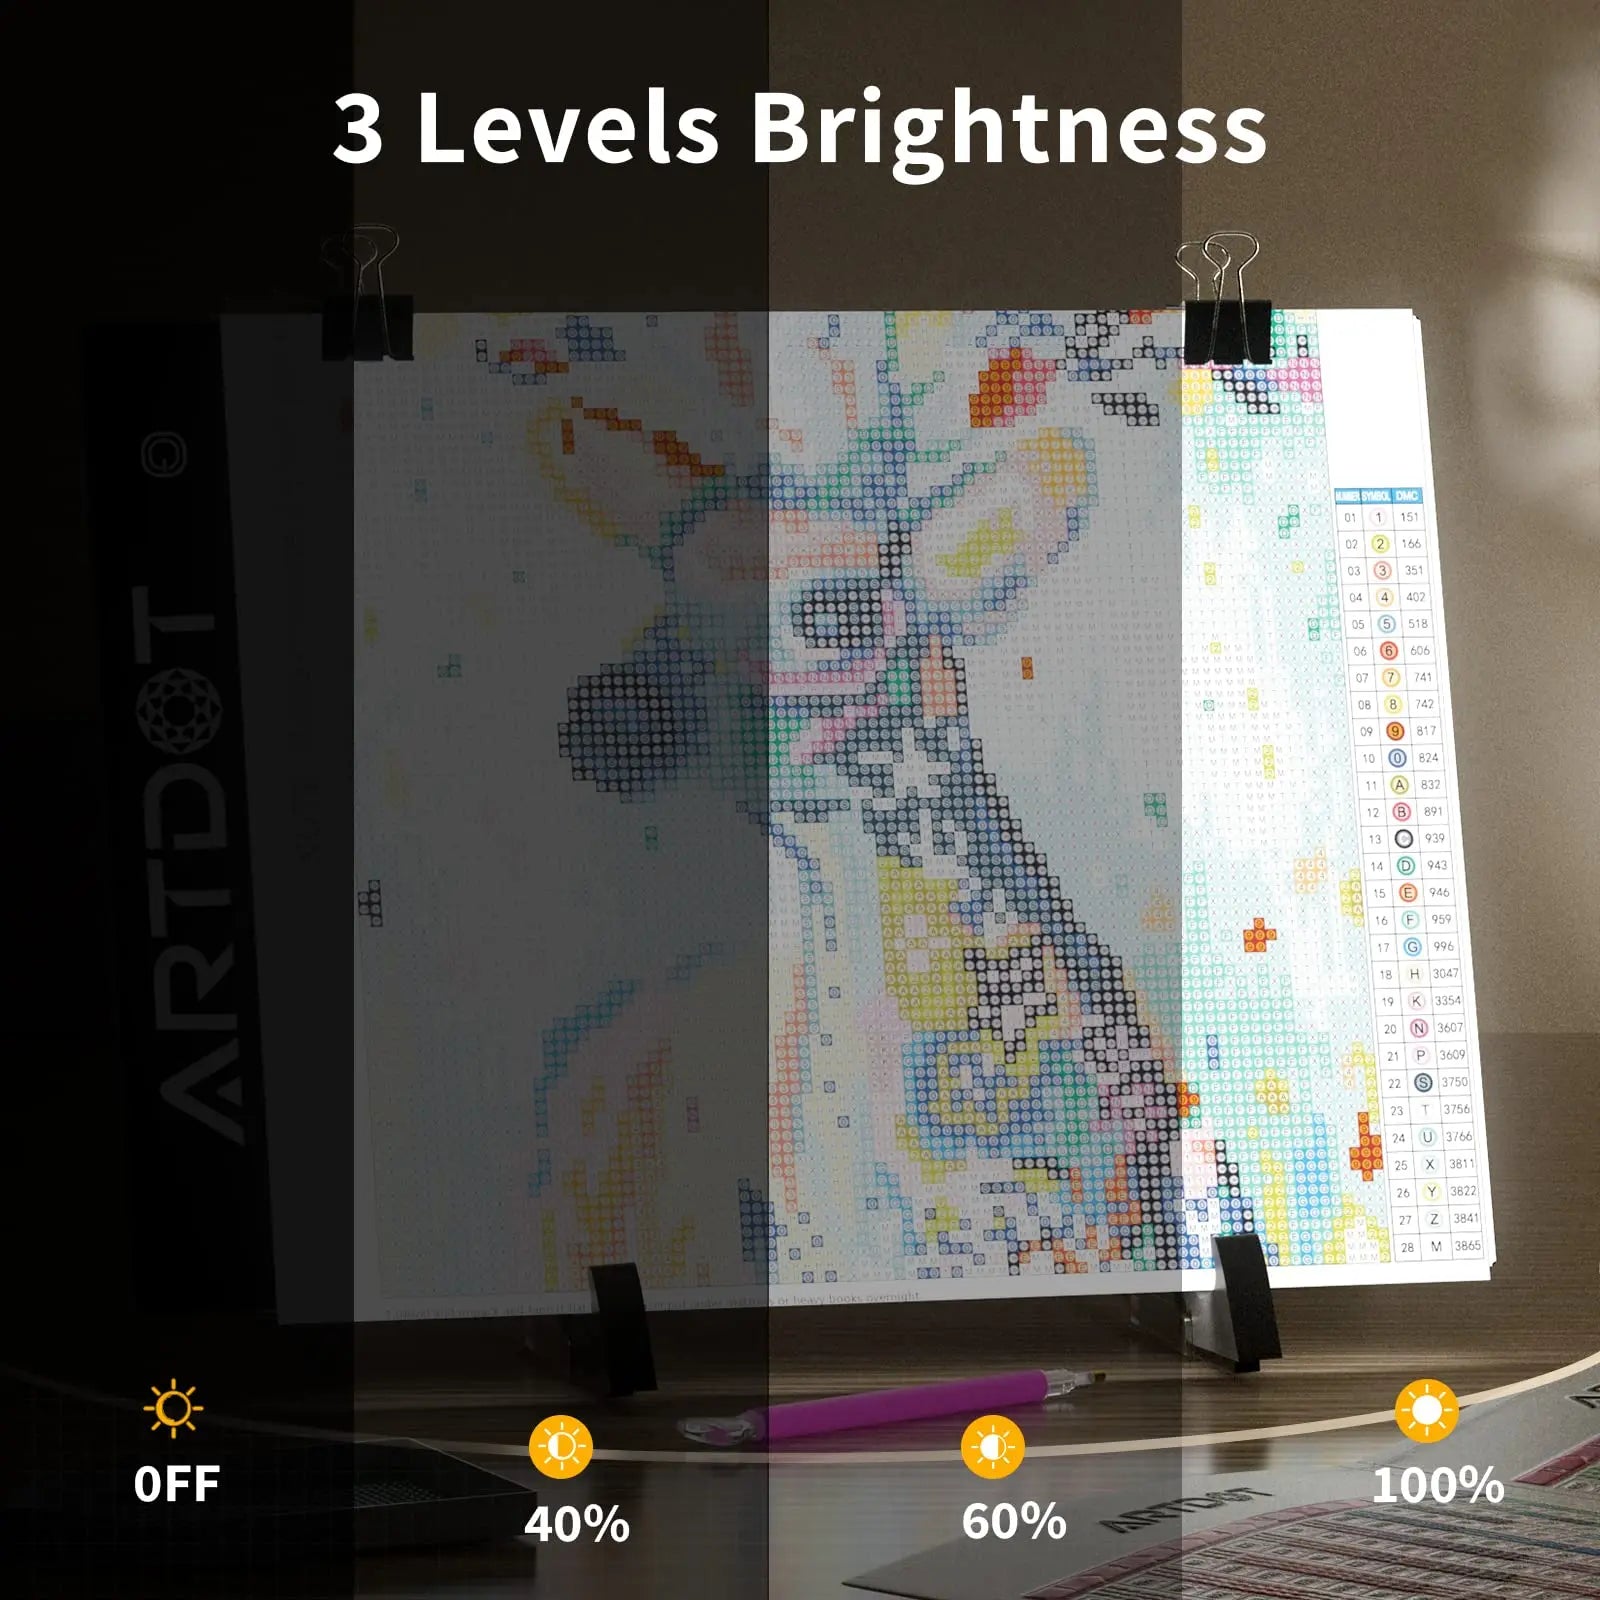 Diamond Painting LED Light Pad - 3 Brightness Modes in 2023